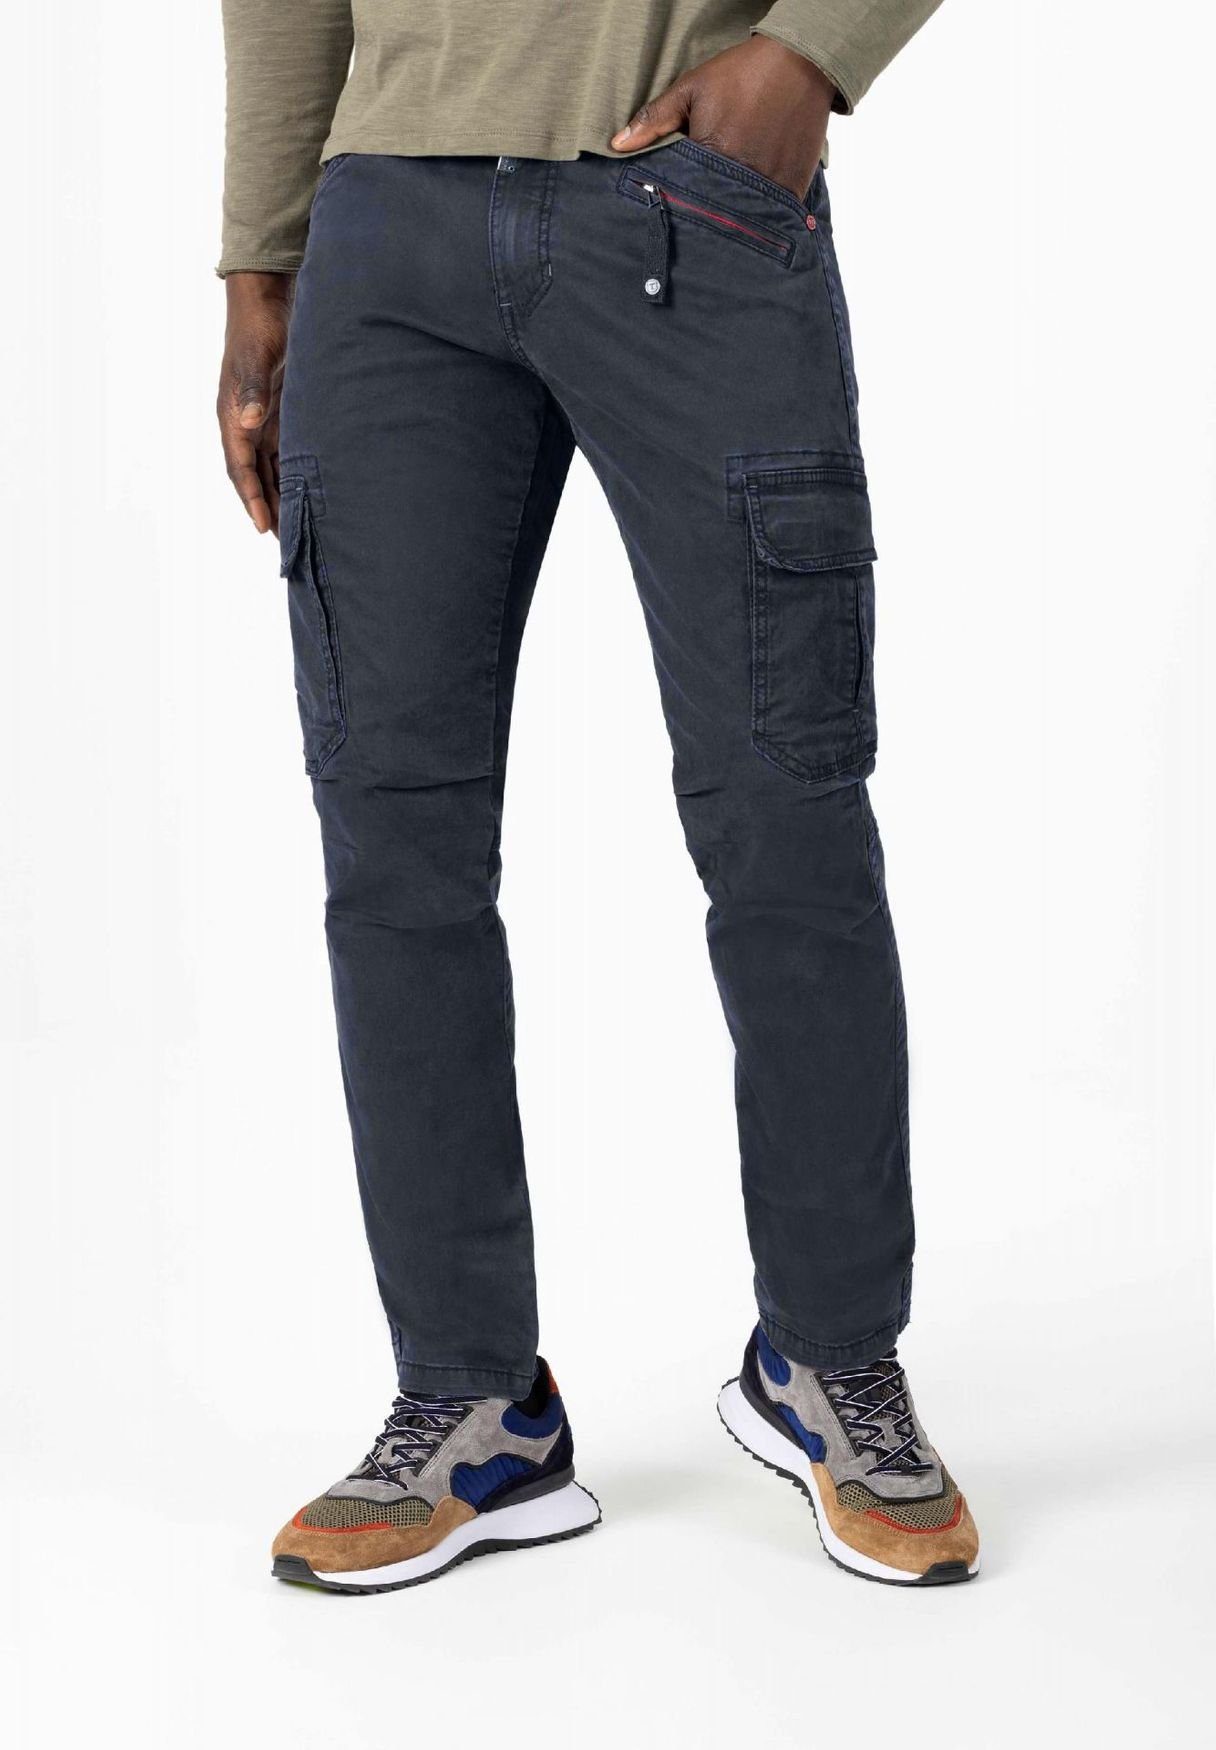 in BenTZ Cargohose Regular Stretch Fit Regular 5180 Blau Hose Jeans Cargo TIMEZONE Denim